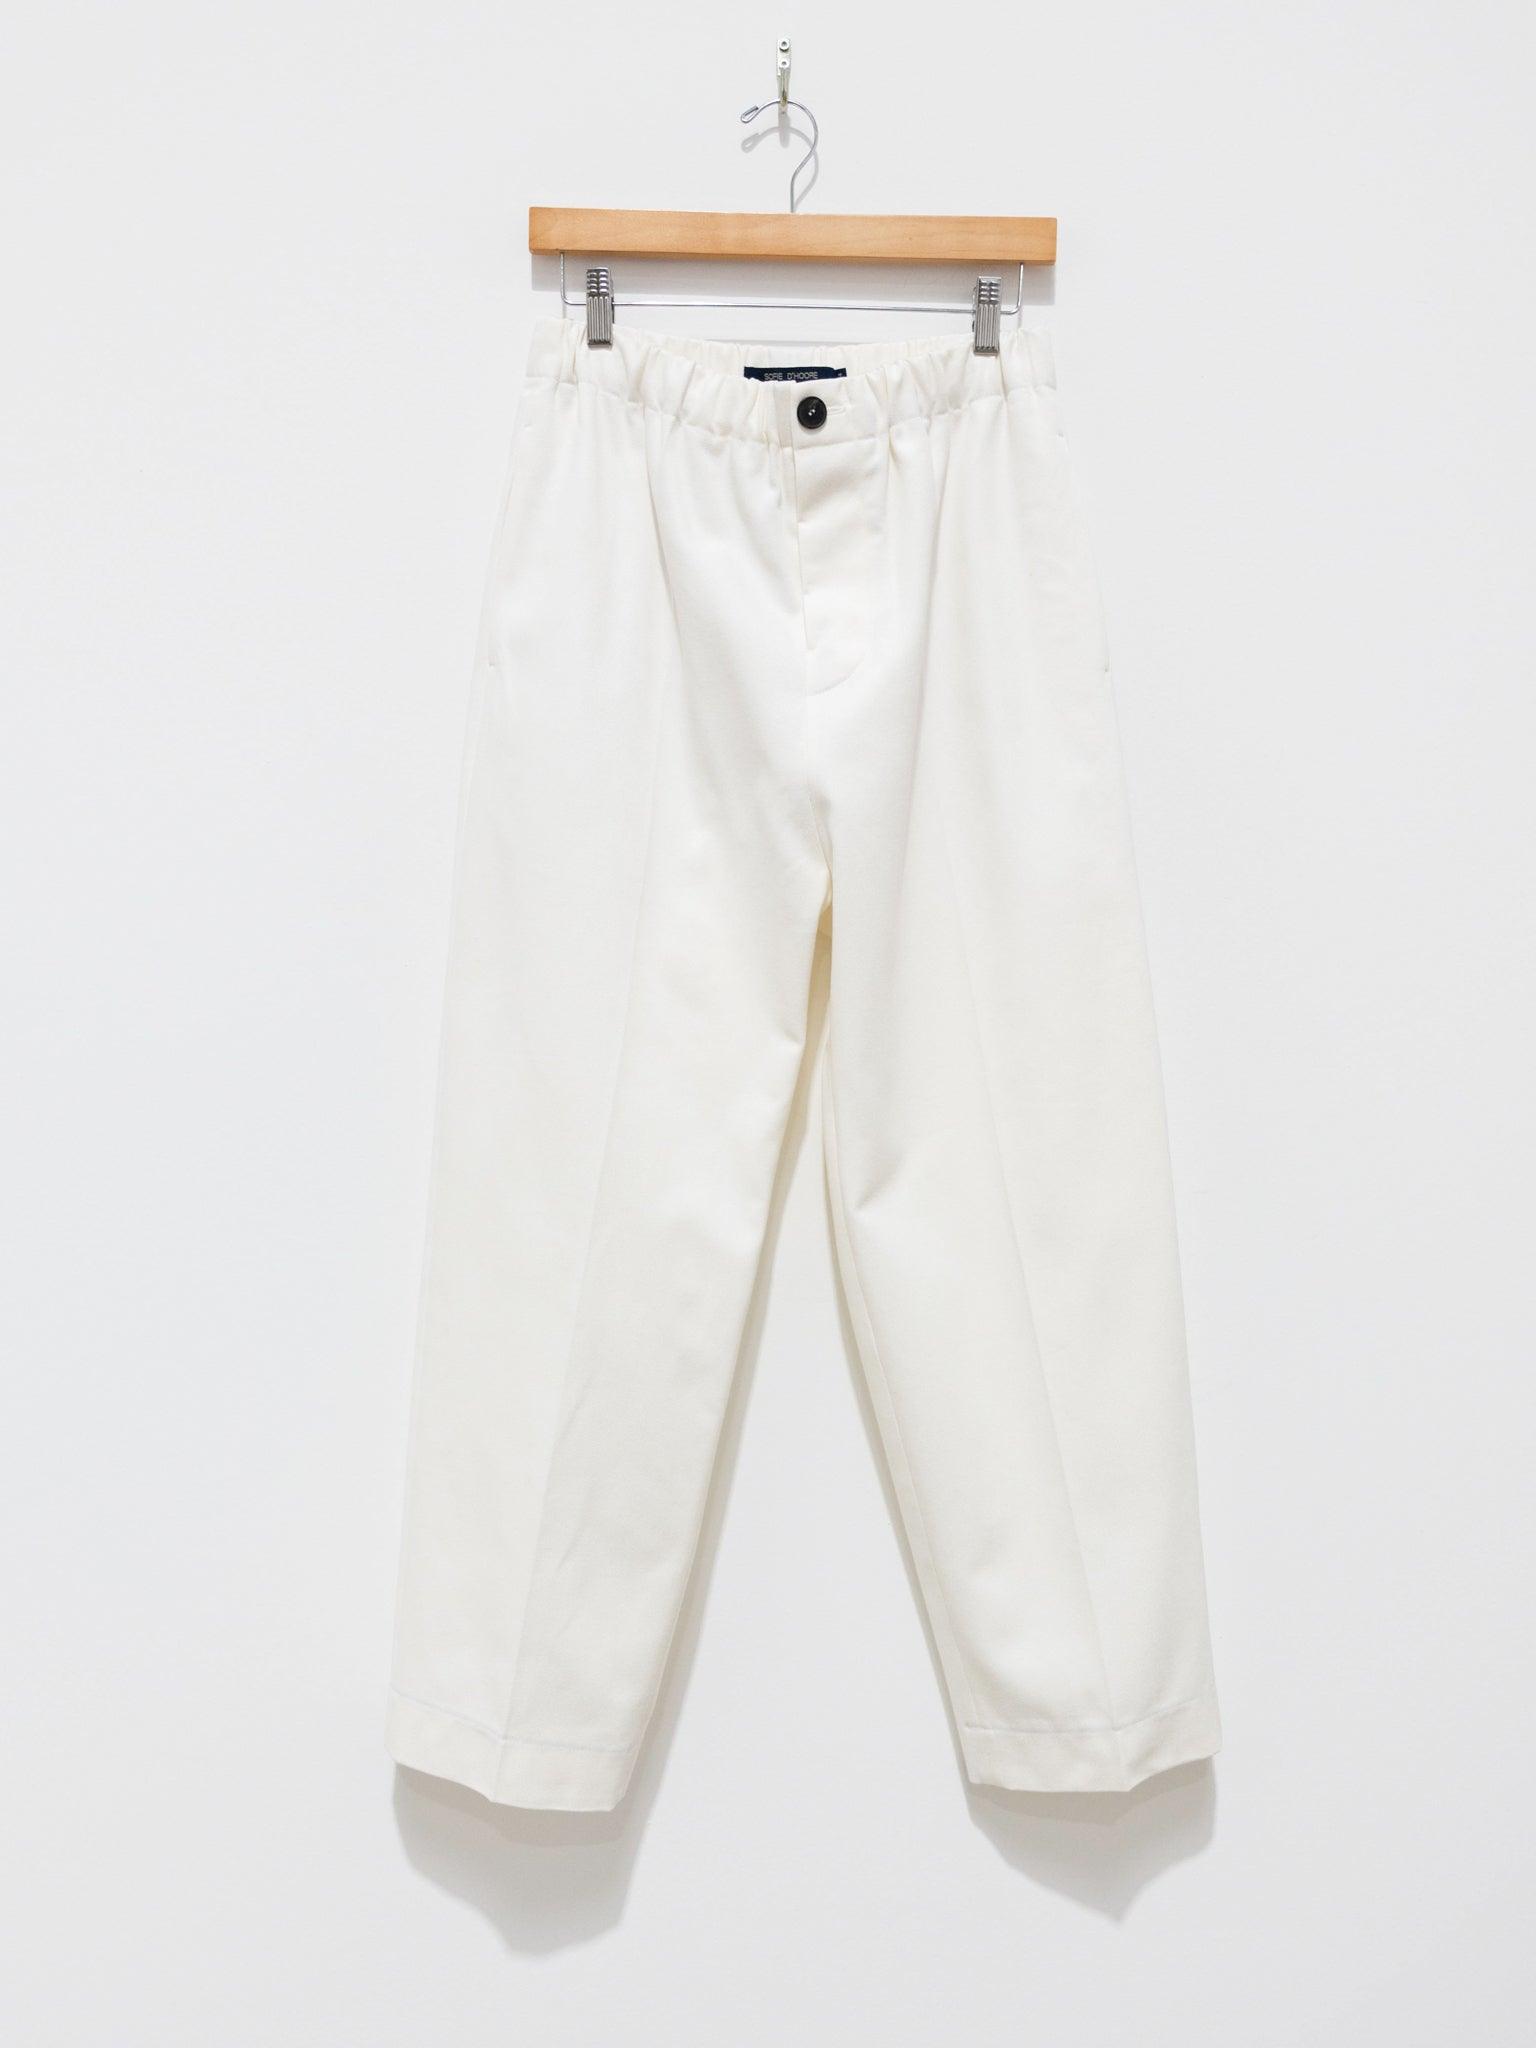 Namu Shop - Sofie D'Hoore Piper Trouser - Off White